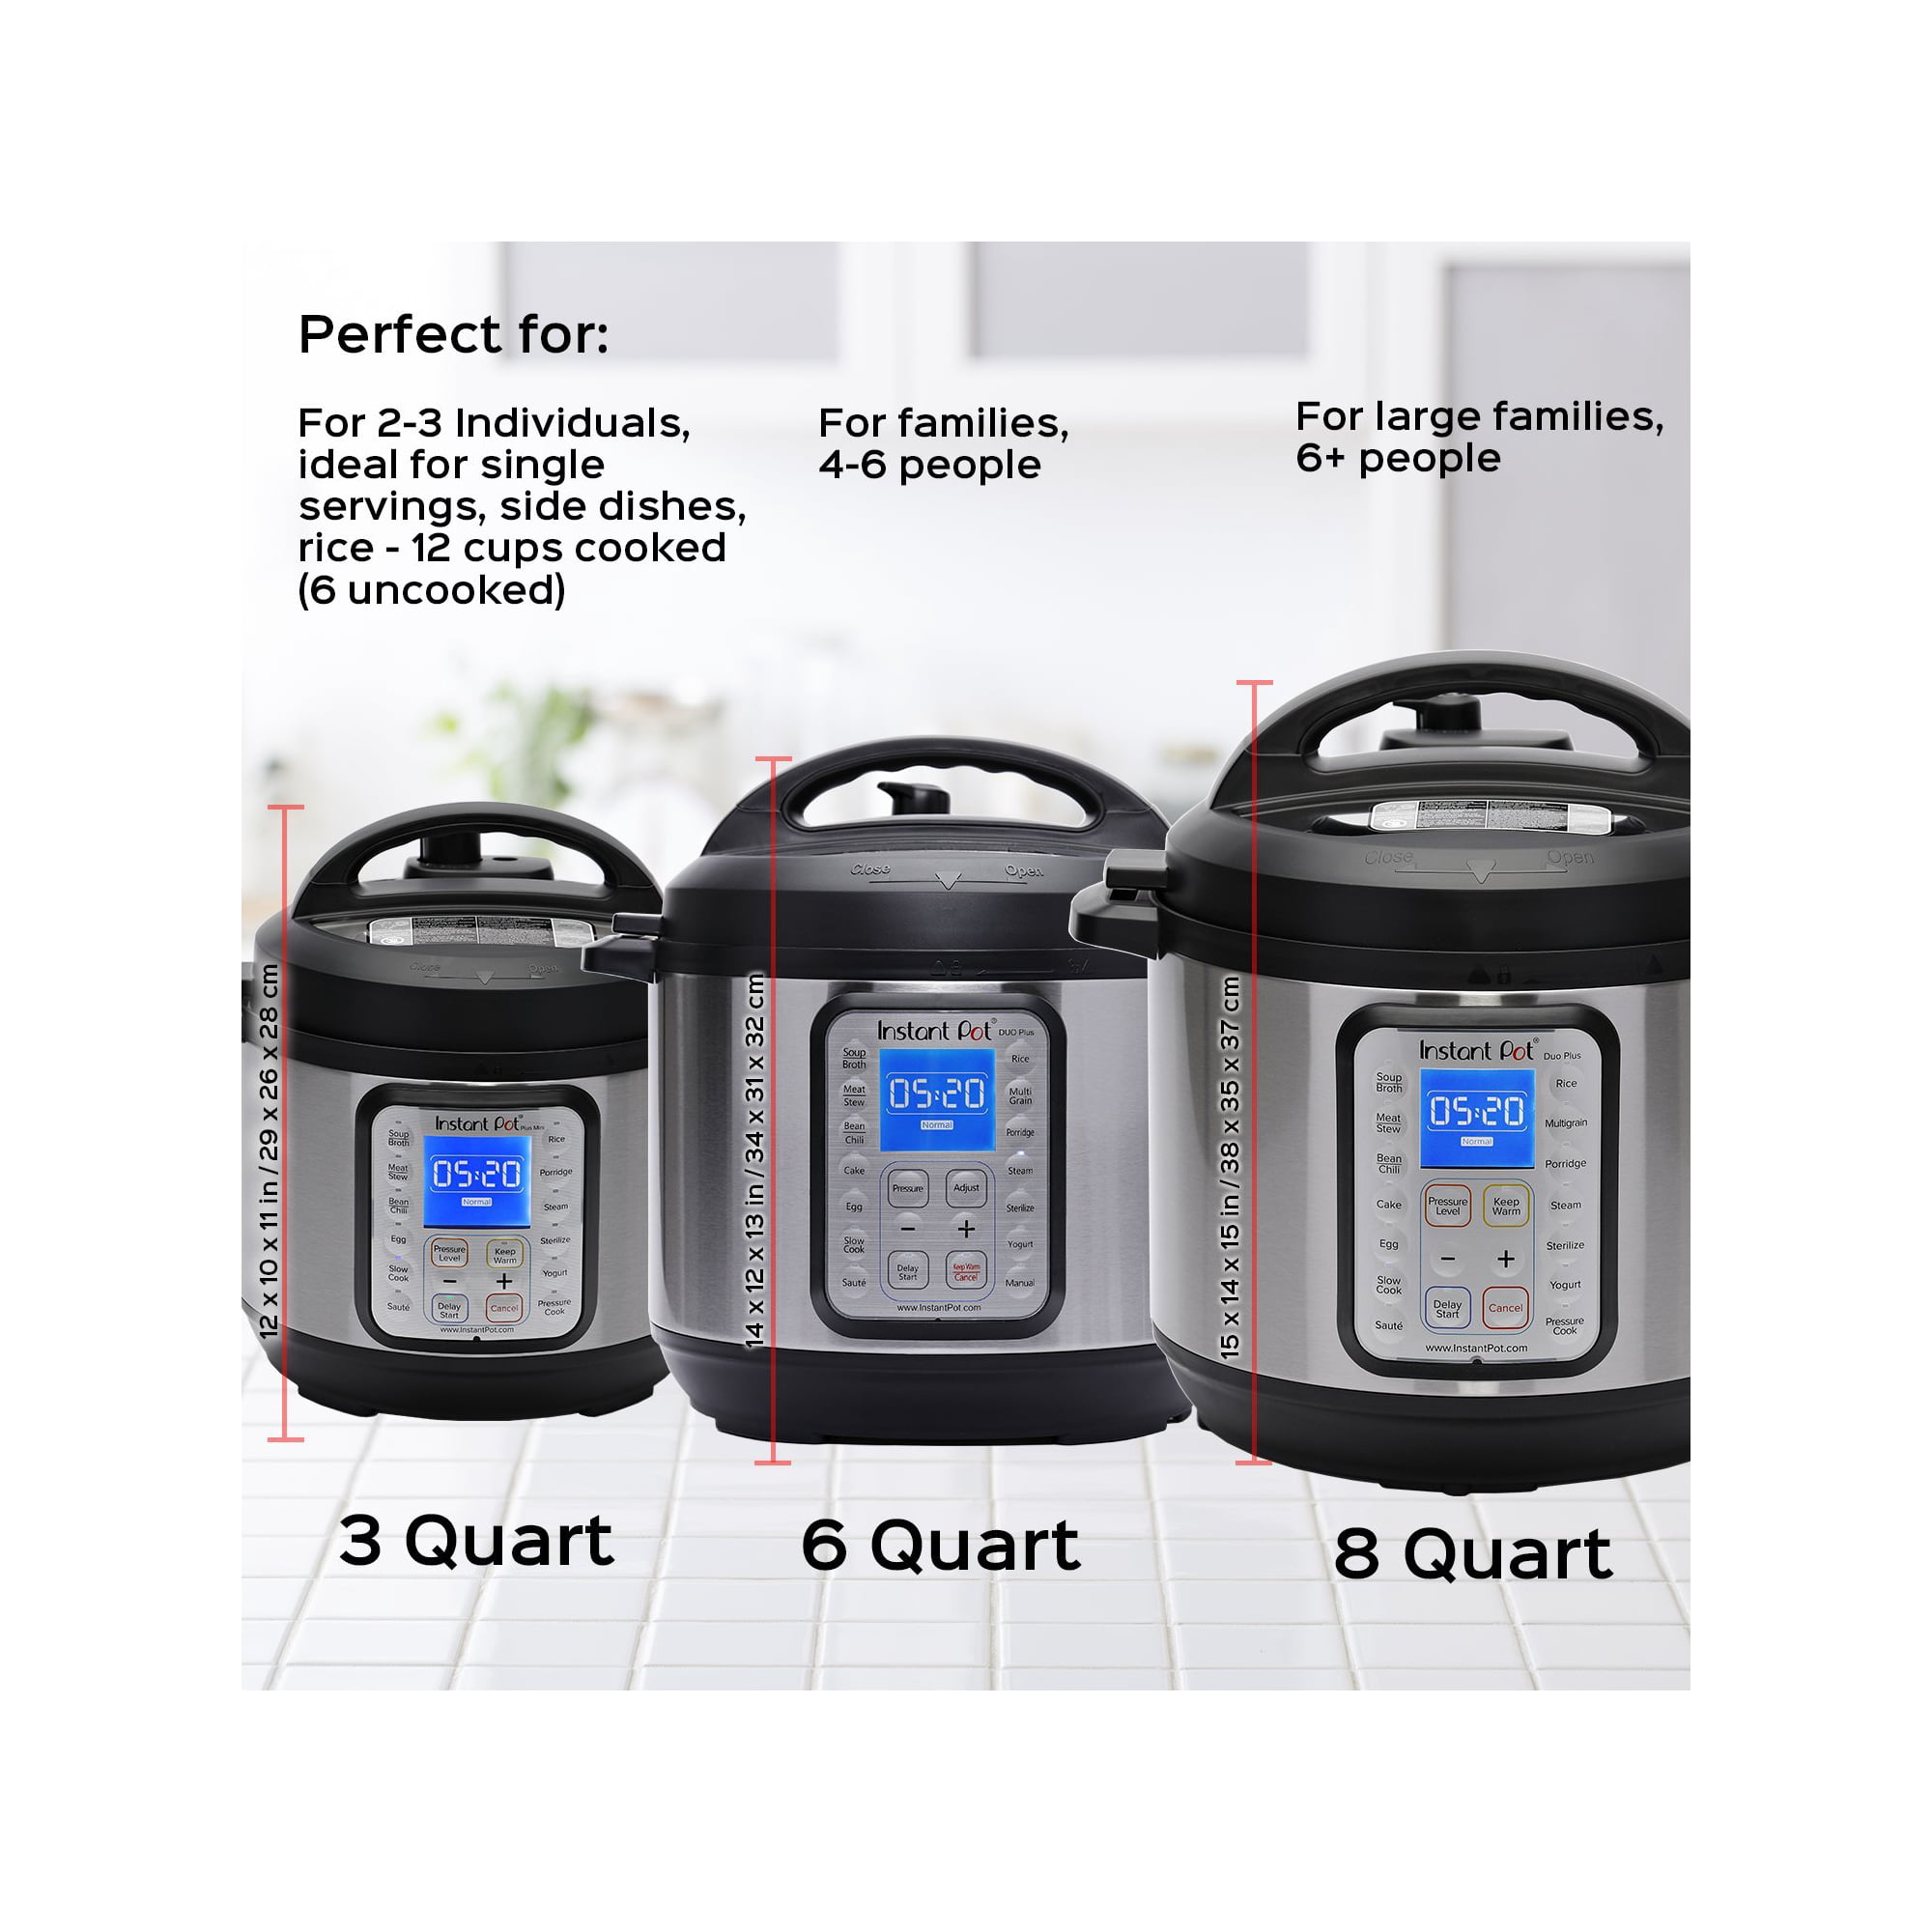 Instant Pot Duo Plus 3-qt. 9-in-1 Multi-Use Pressure Cooker